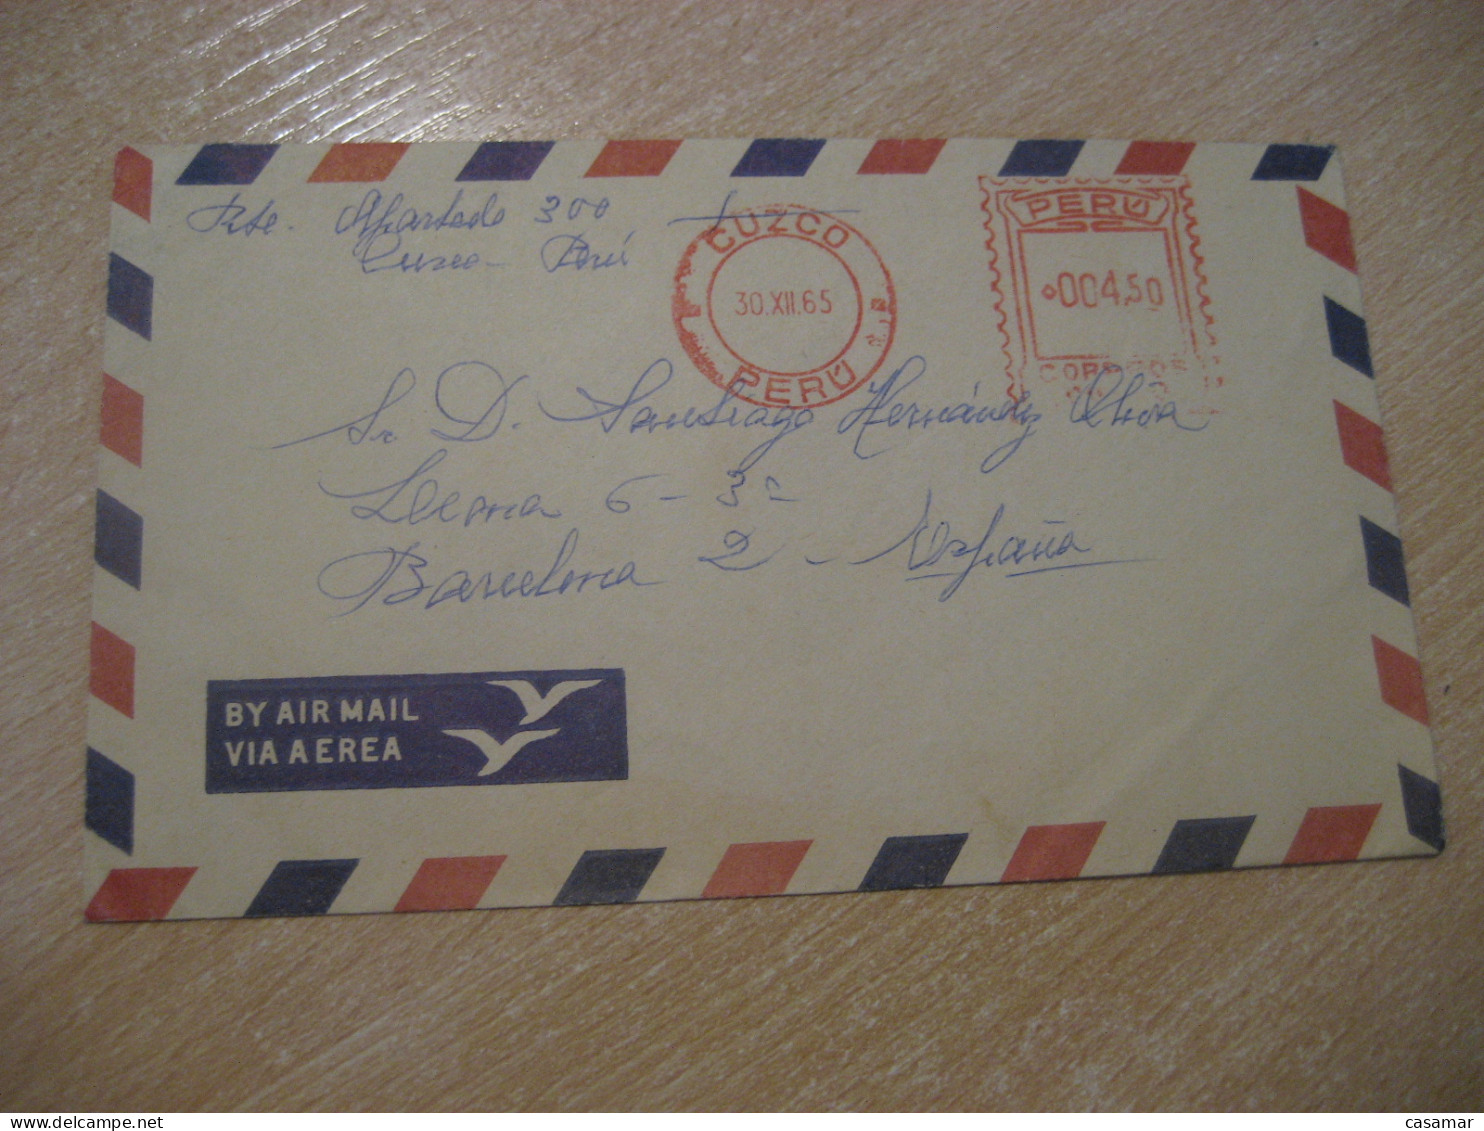 CUZCO 1965 To Barcelona Spain Meter Mail Cancel Cover PERU - Pérou